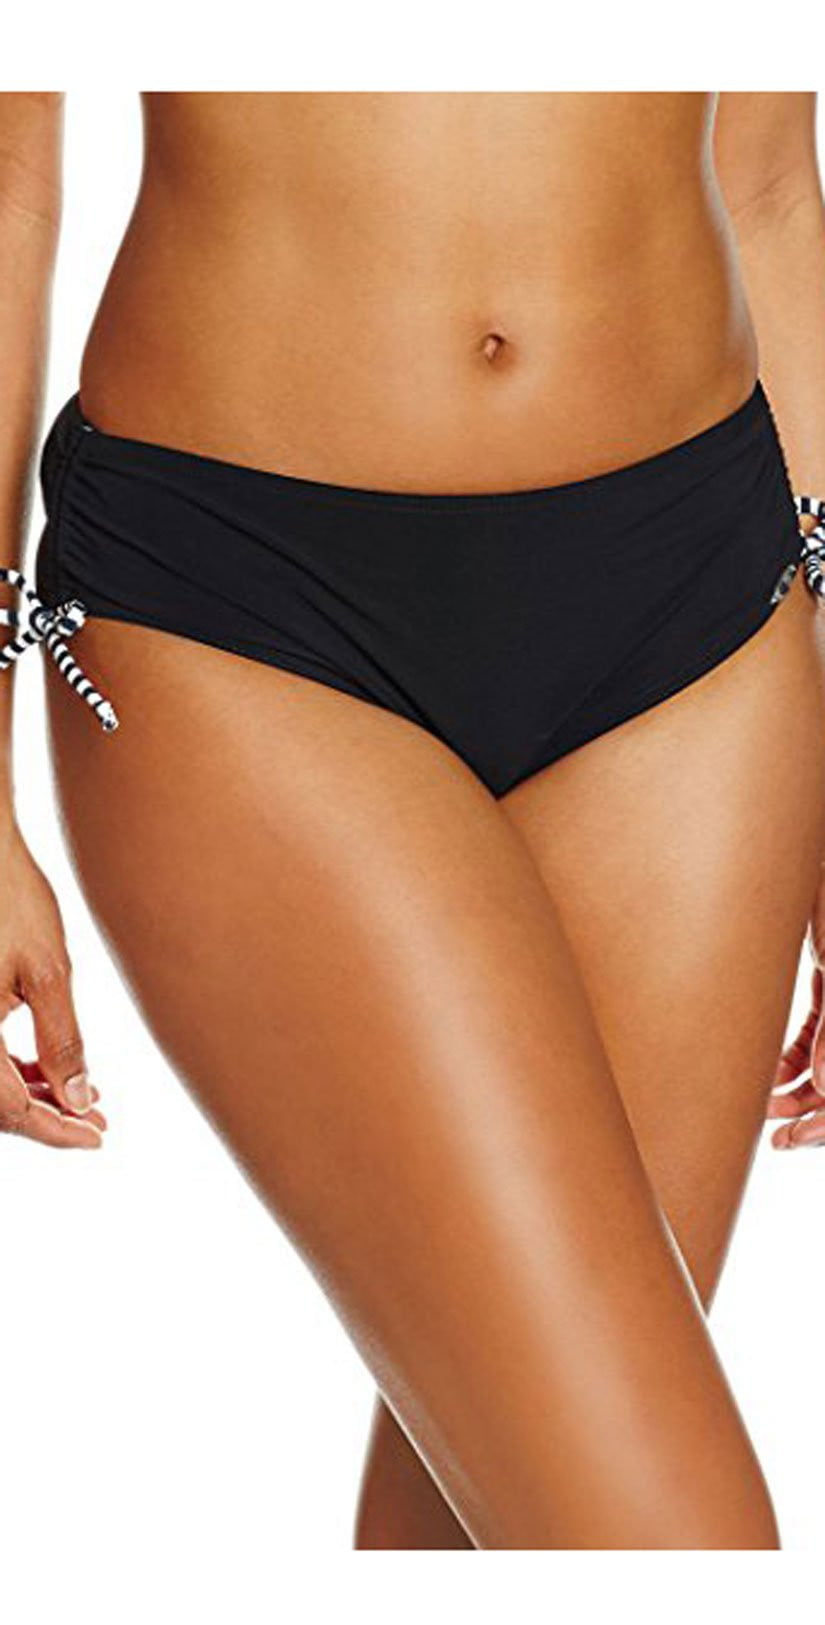 Sunflair Mix and Match Bikini Black Bottom 21297-BLK: